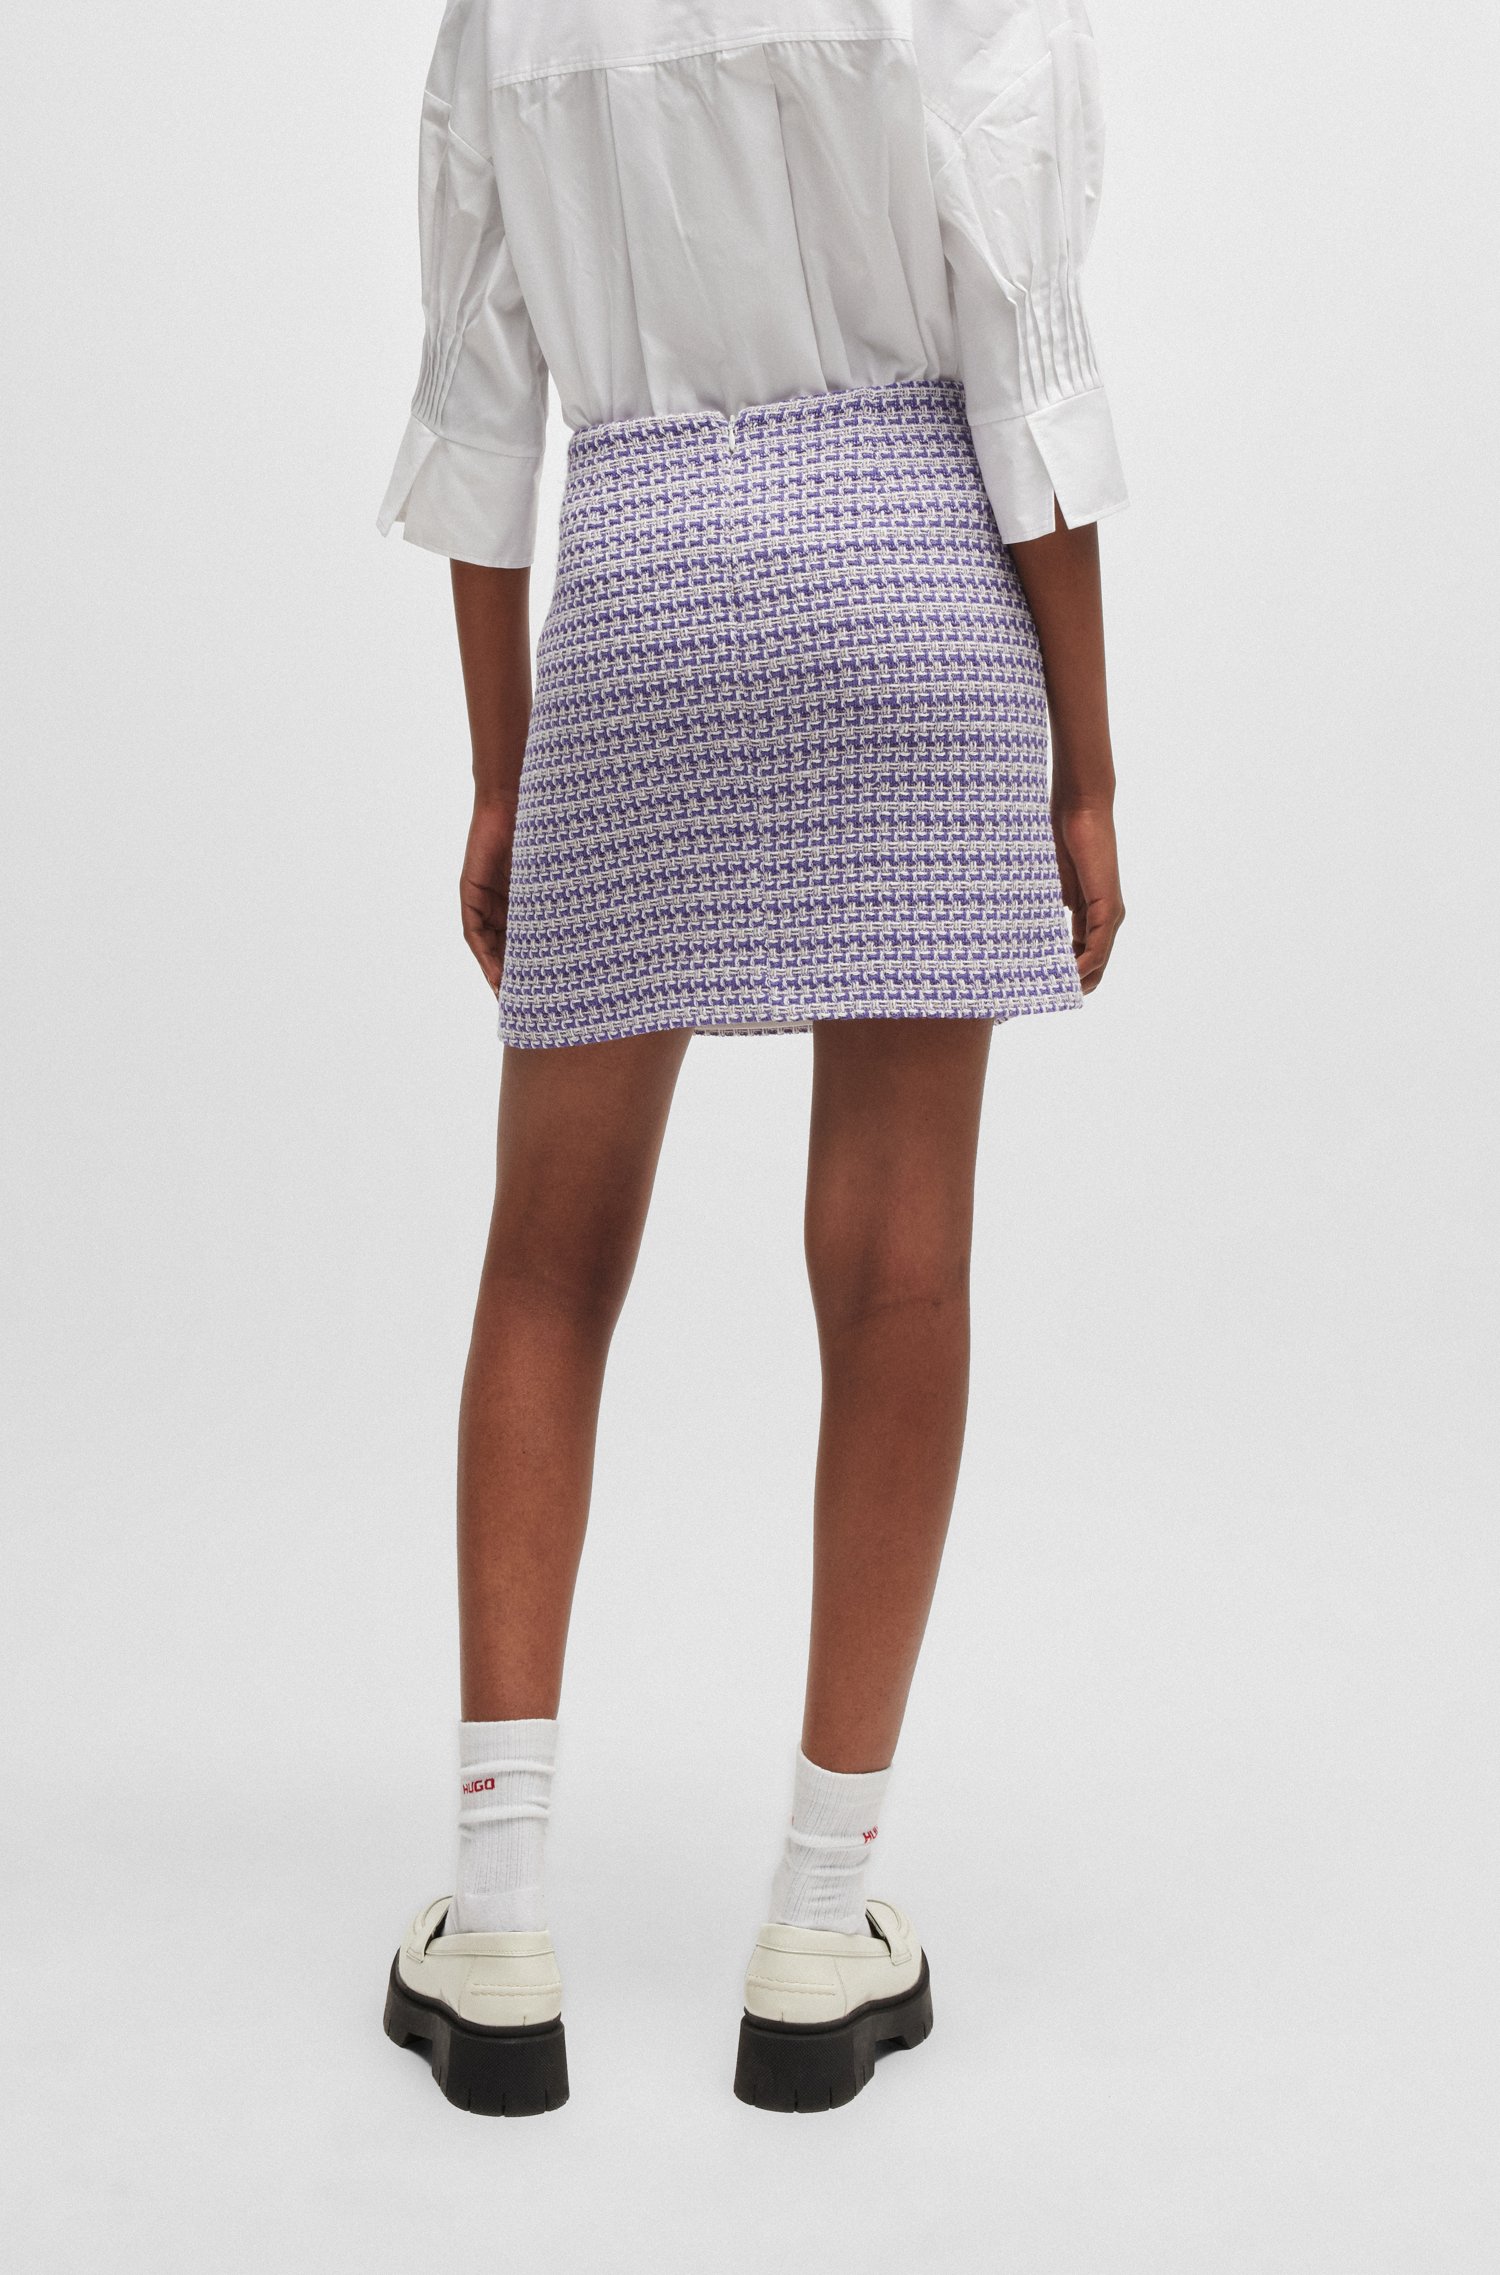 Patterned mini skirt a cotton blend